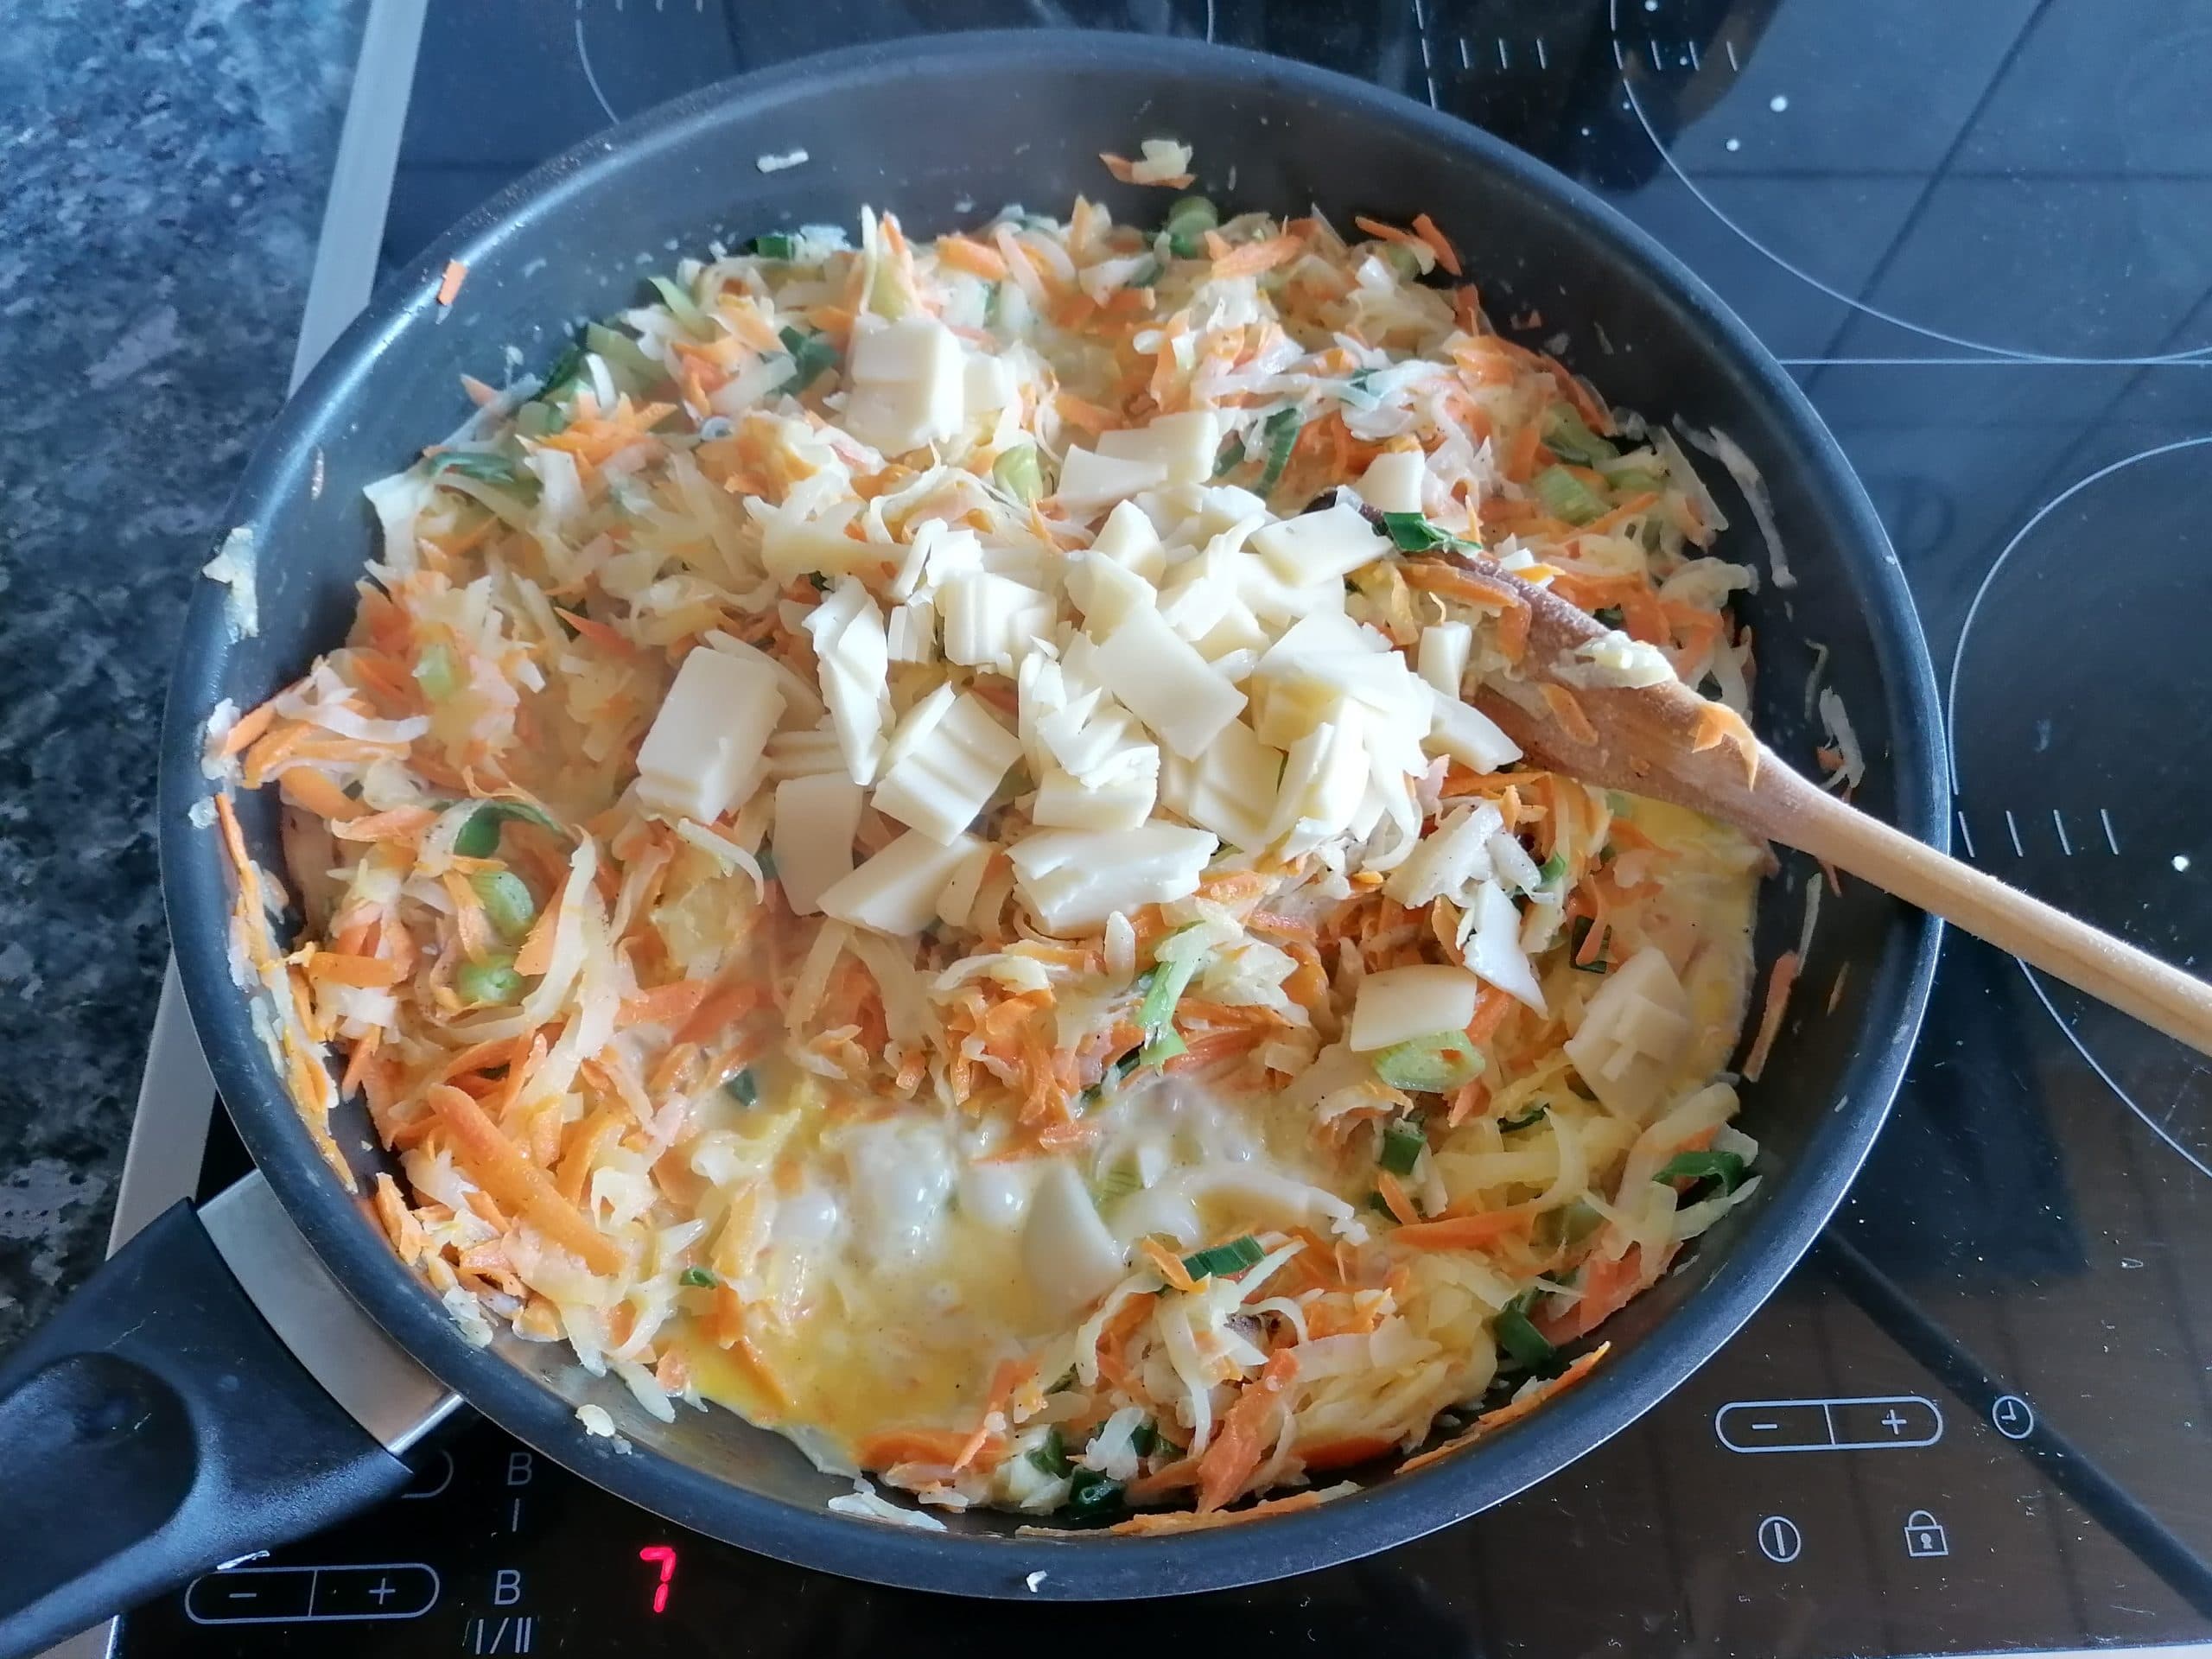 How to make creamy kohlrabi and cheese sauce.